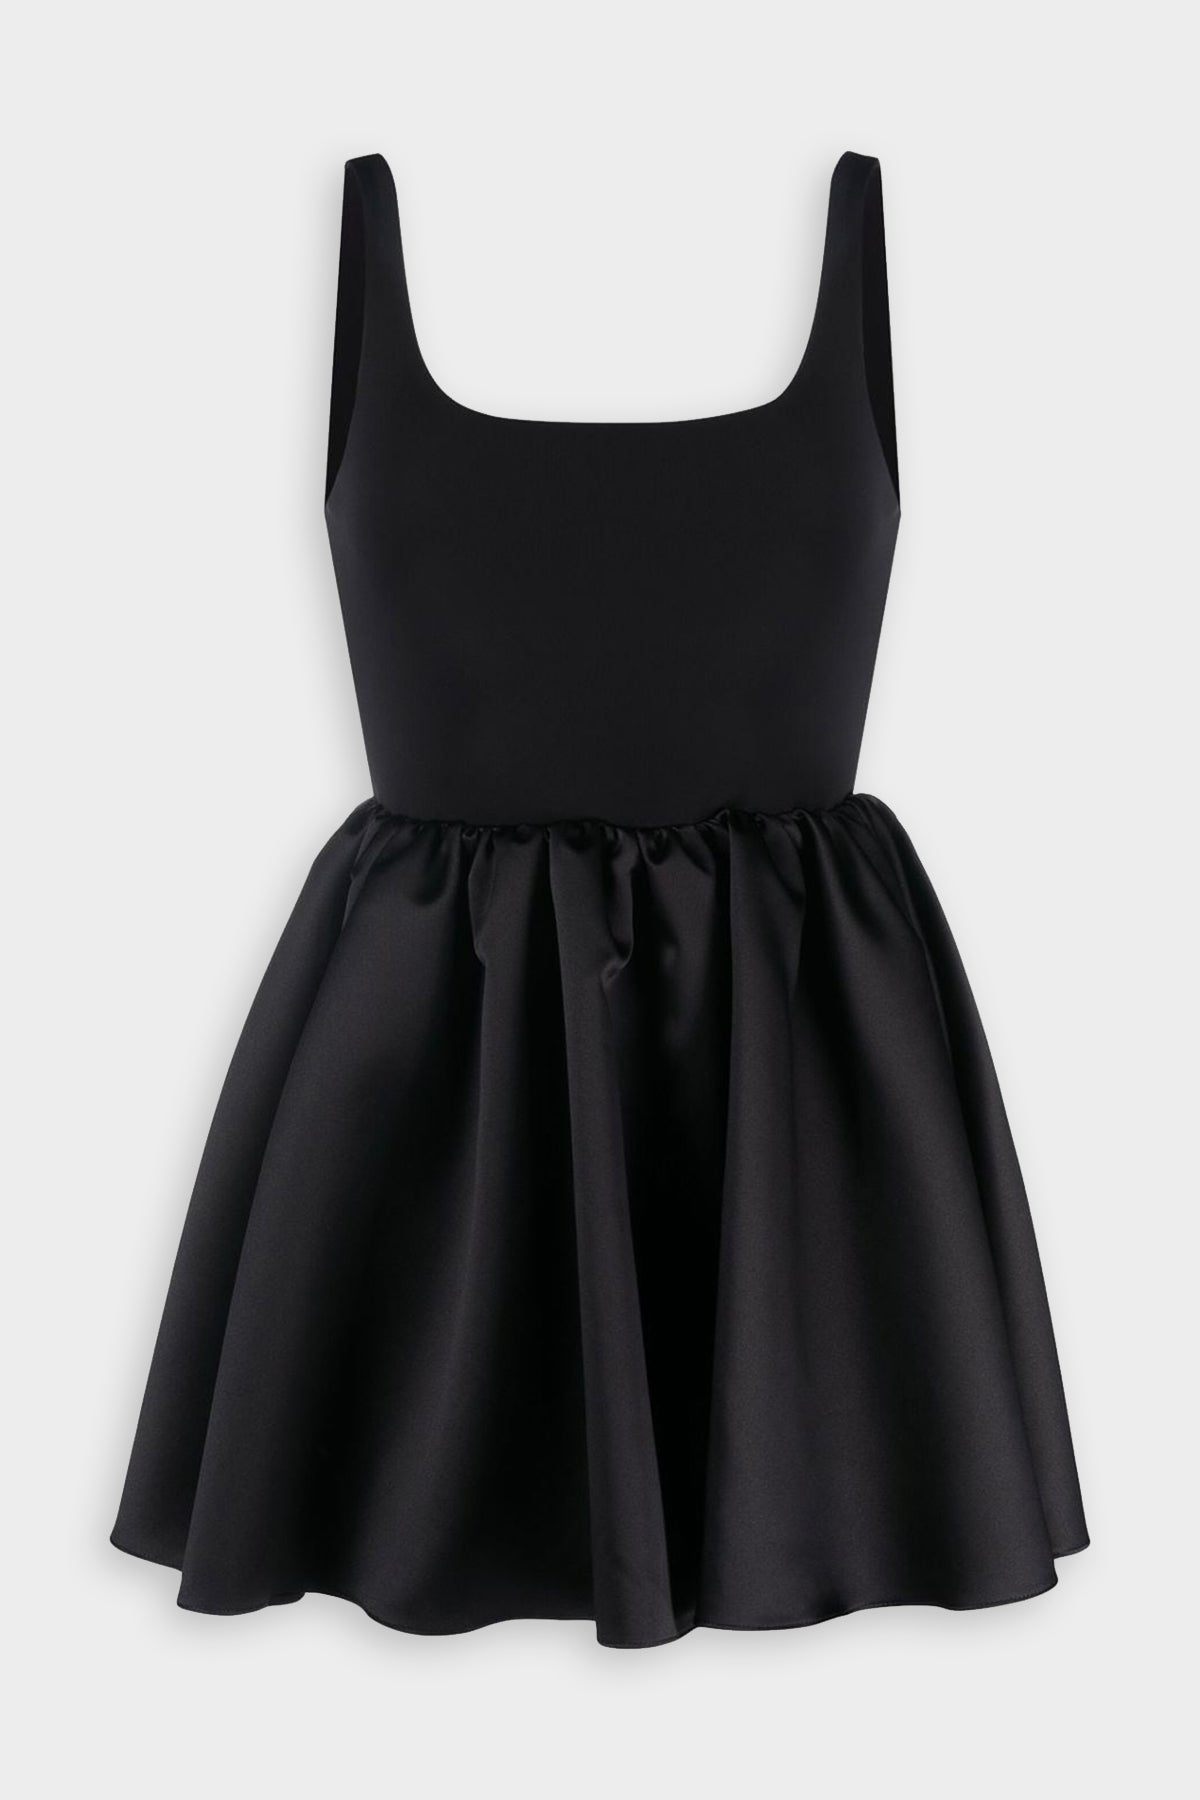 Lola Flared Mini Dress in Black - shop-olivia.com